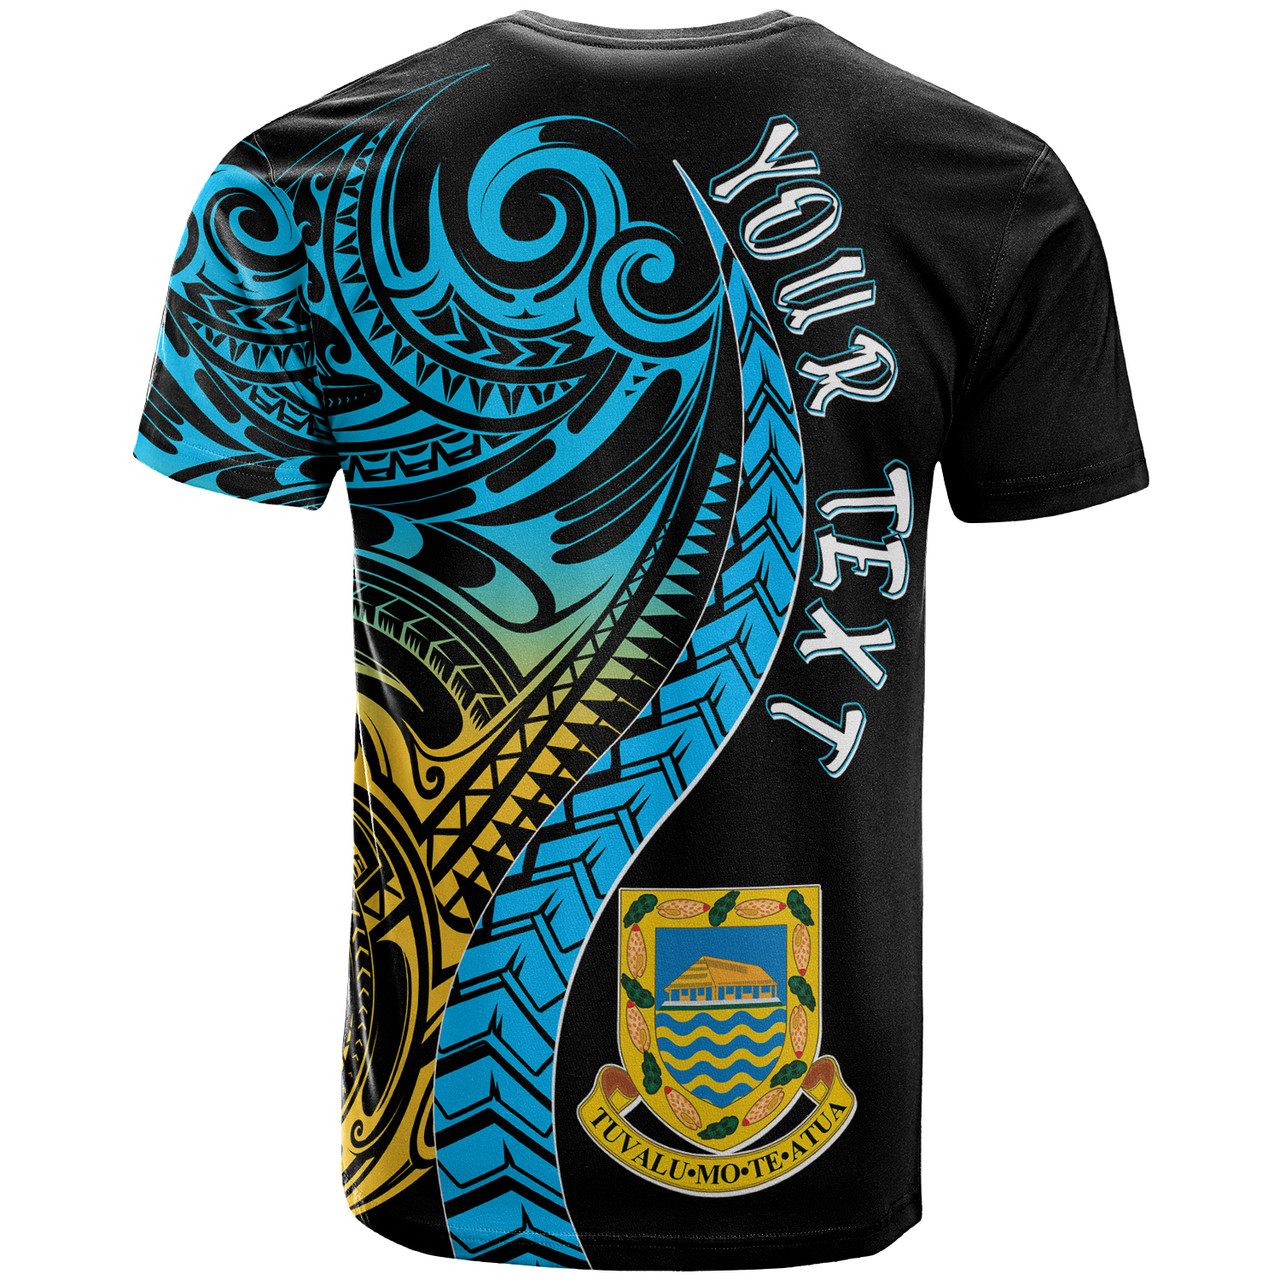 Tuvalu Polynesian T-Shirt - Custom Tuvalu Day with Polynesian Pattern T-Shirt